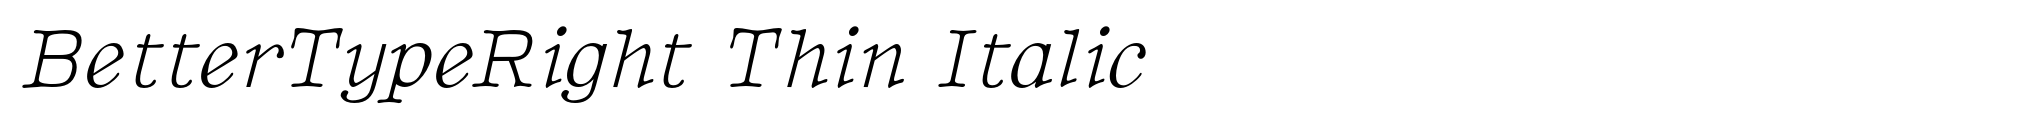 BetterTypeRight Thin Italic image